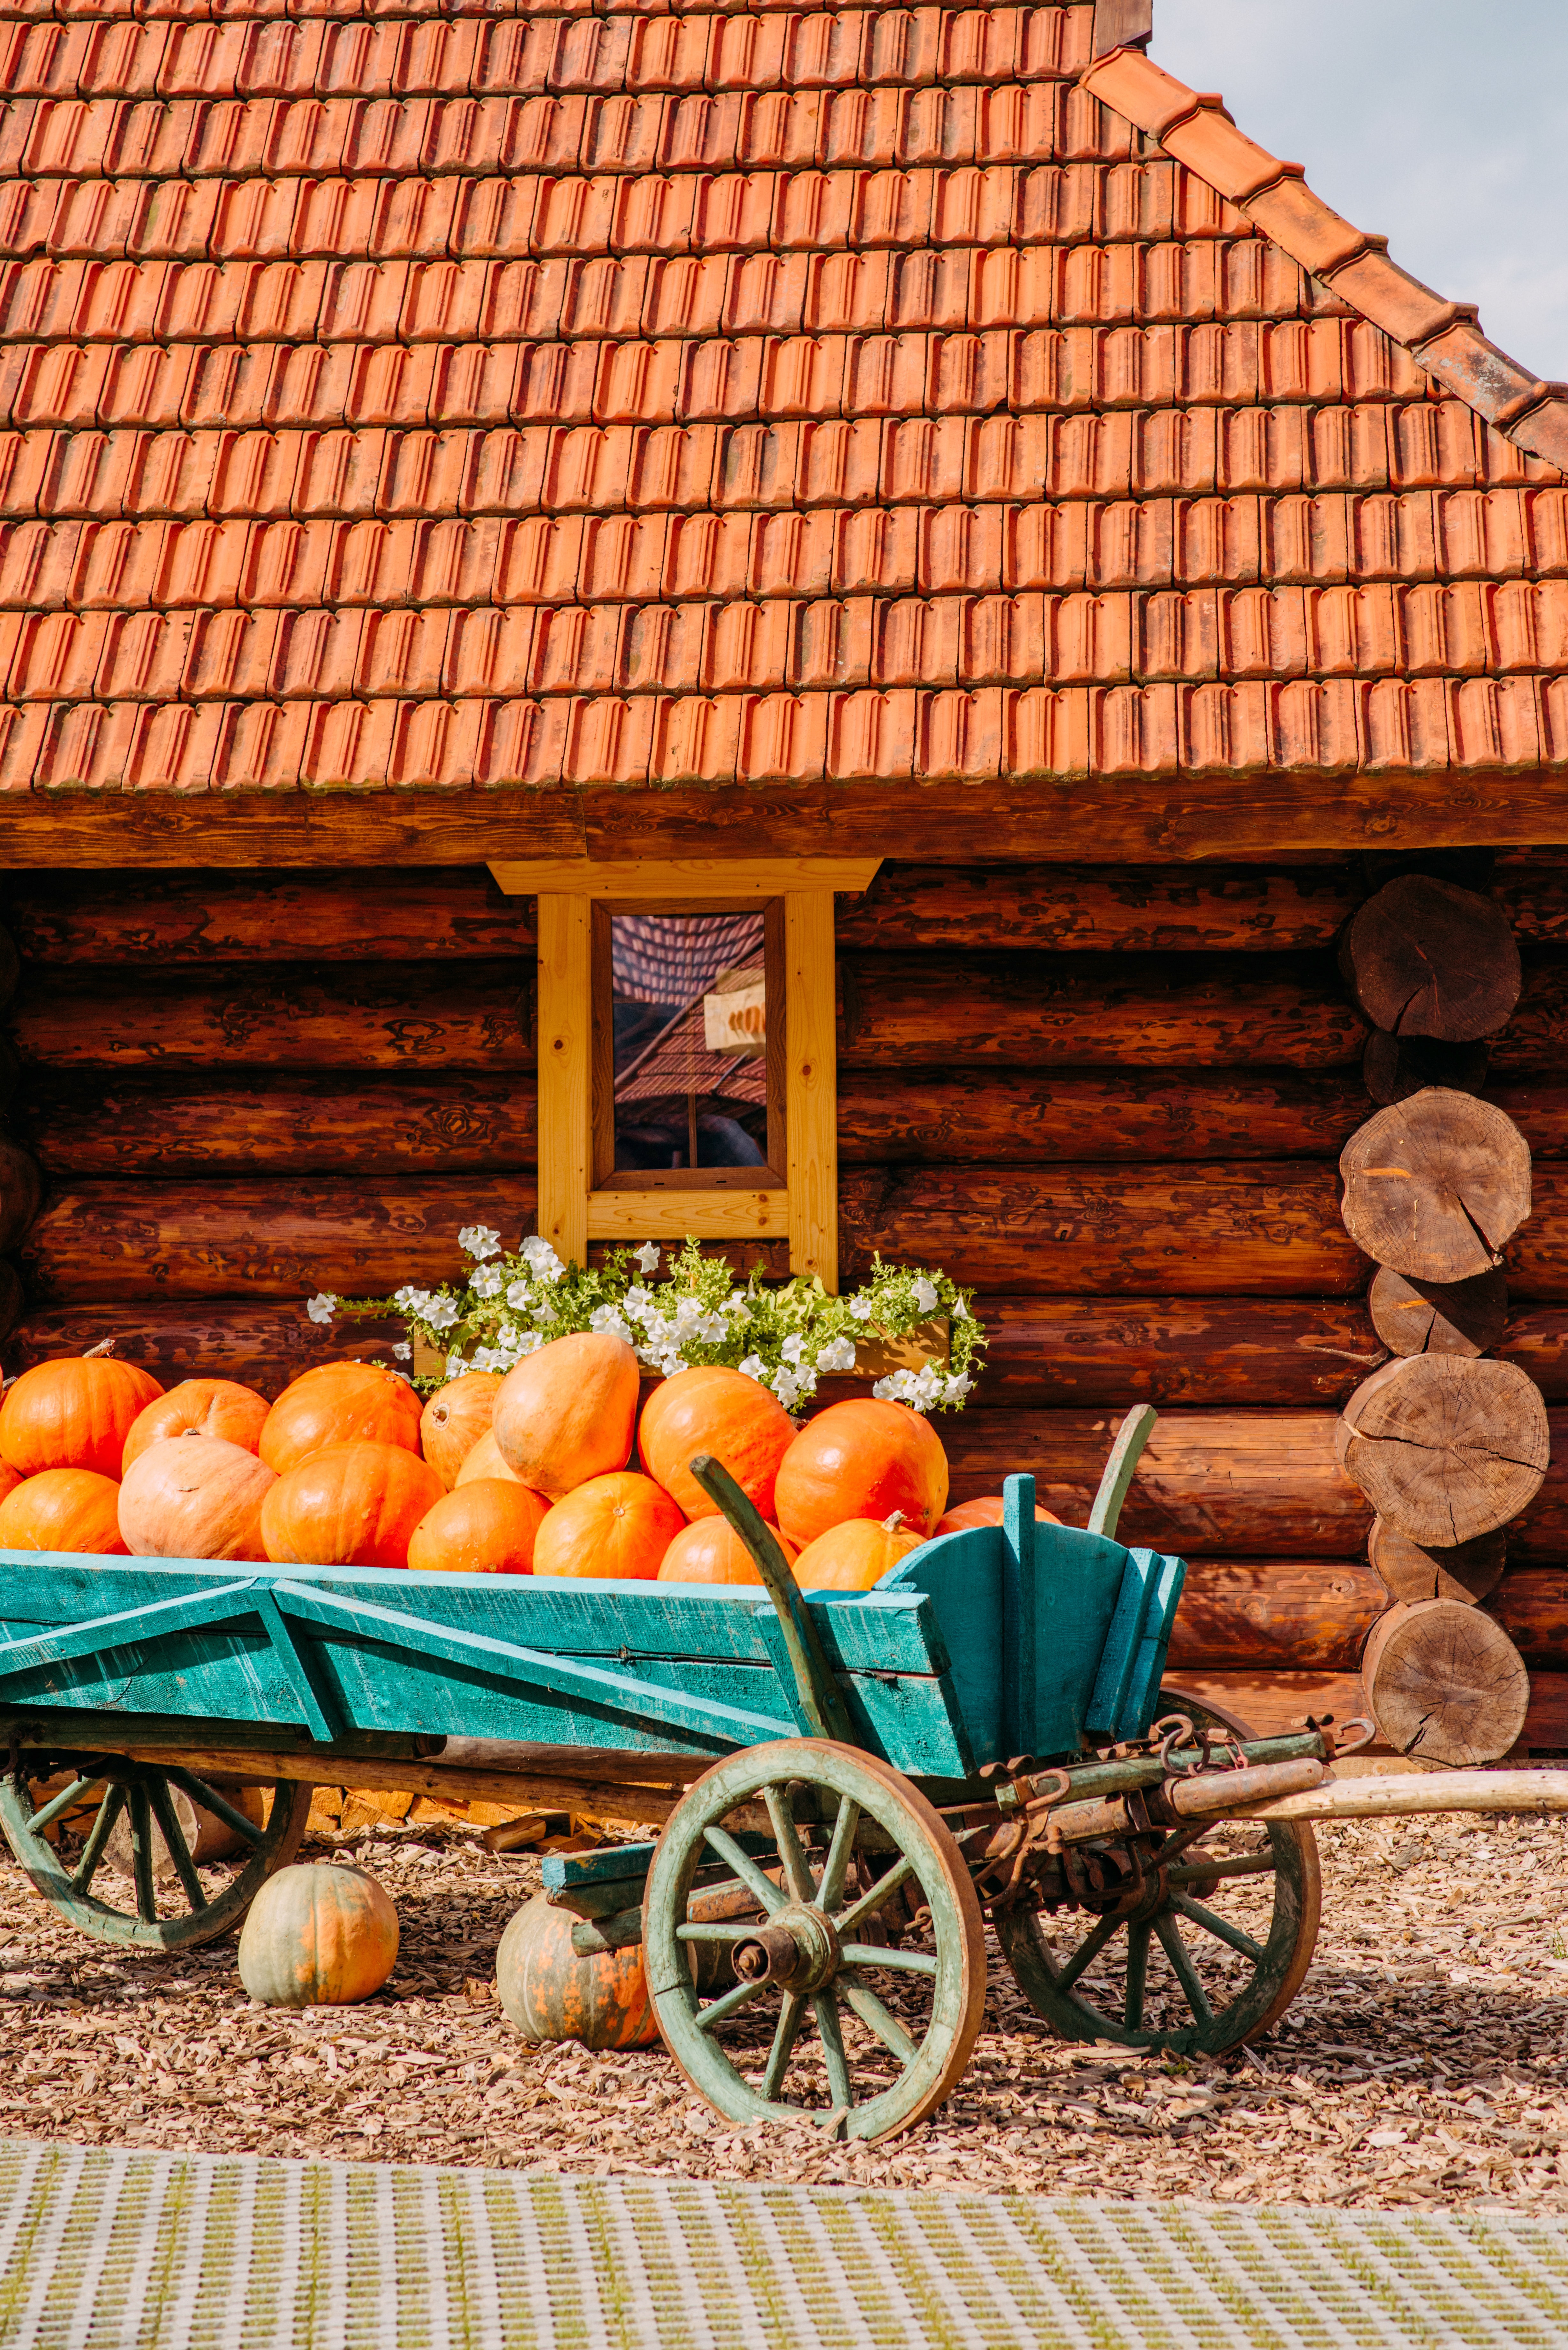 harvest, pumpkin, miscellanea, miscellaneous, house, village, truck, trolley